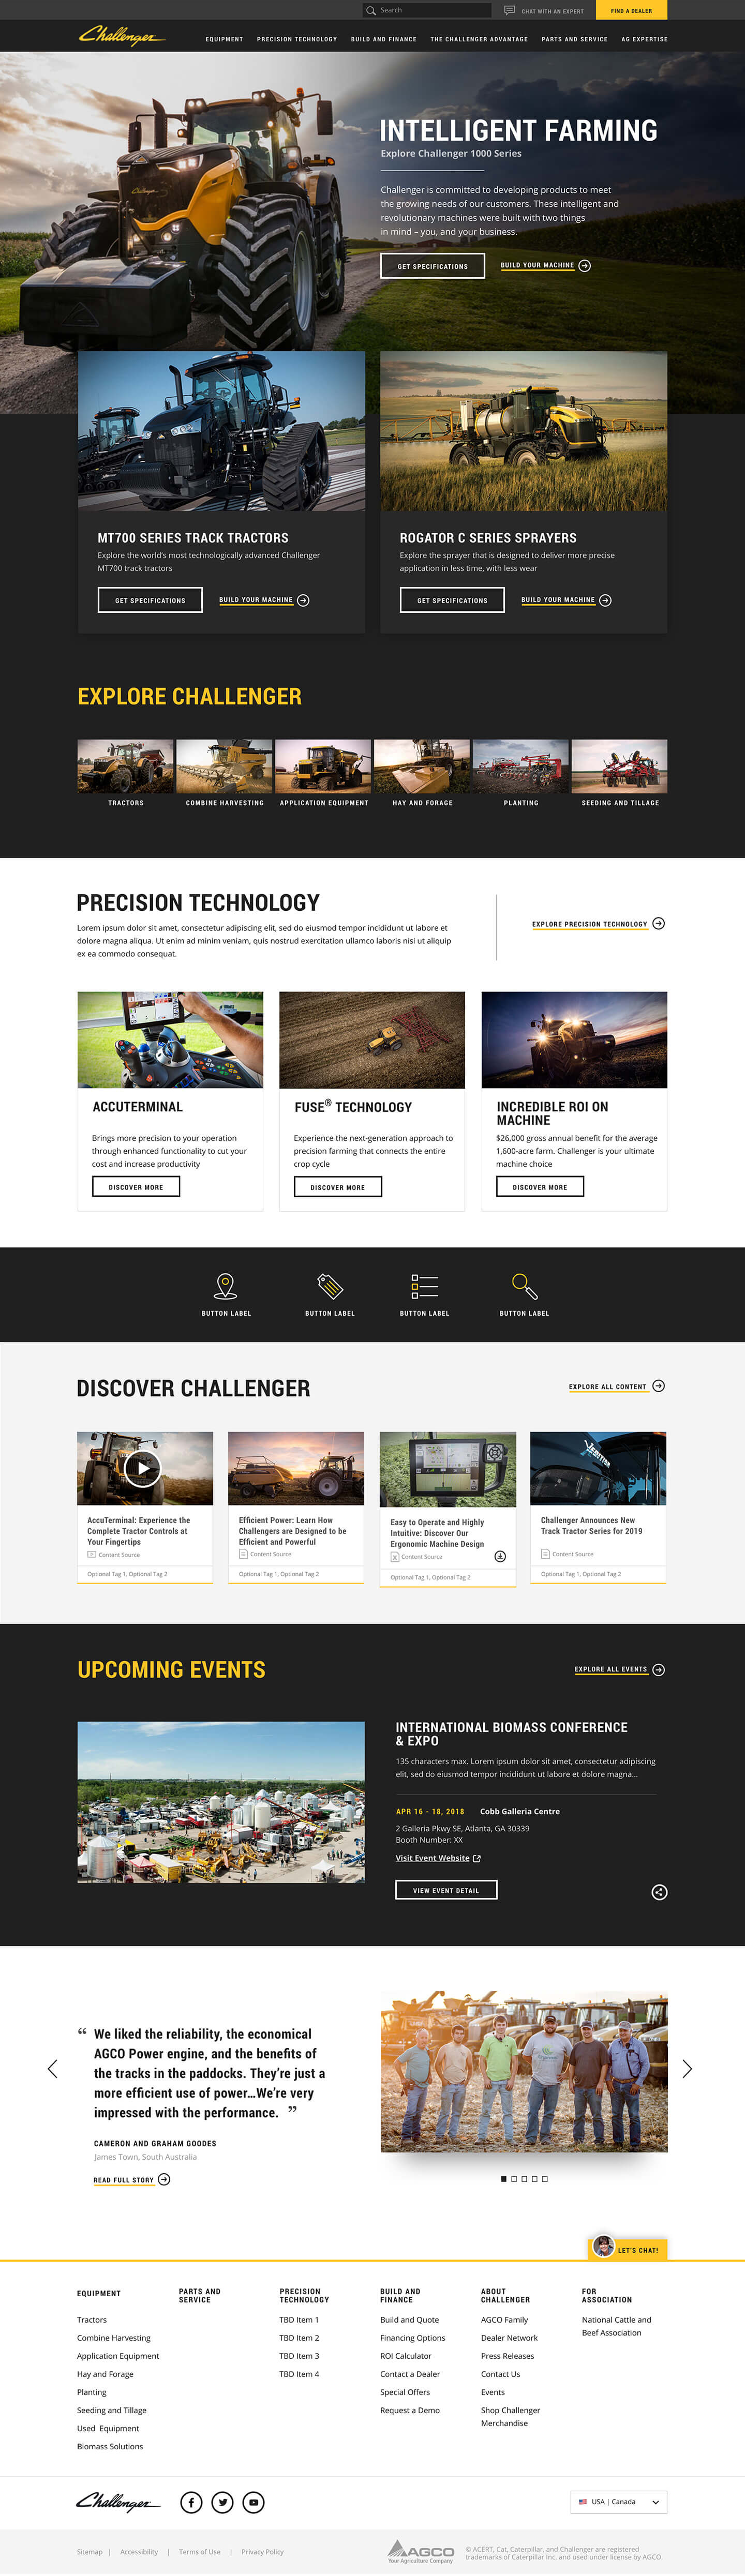 agco-challenger-design-homepage